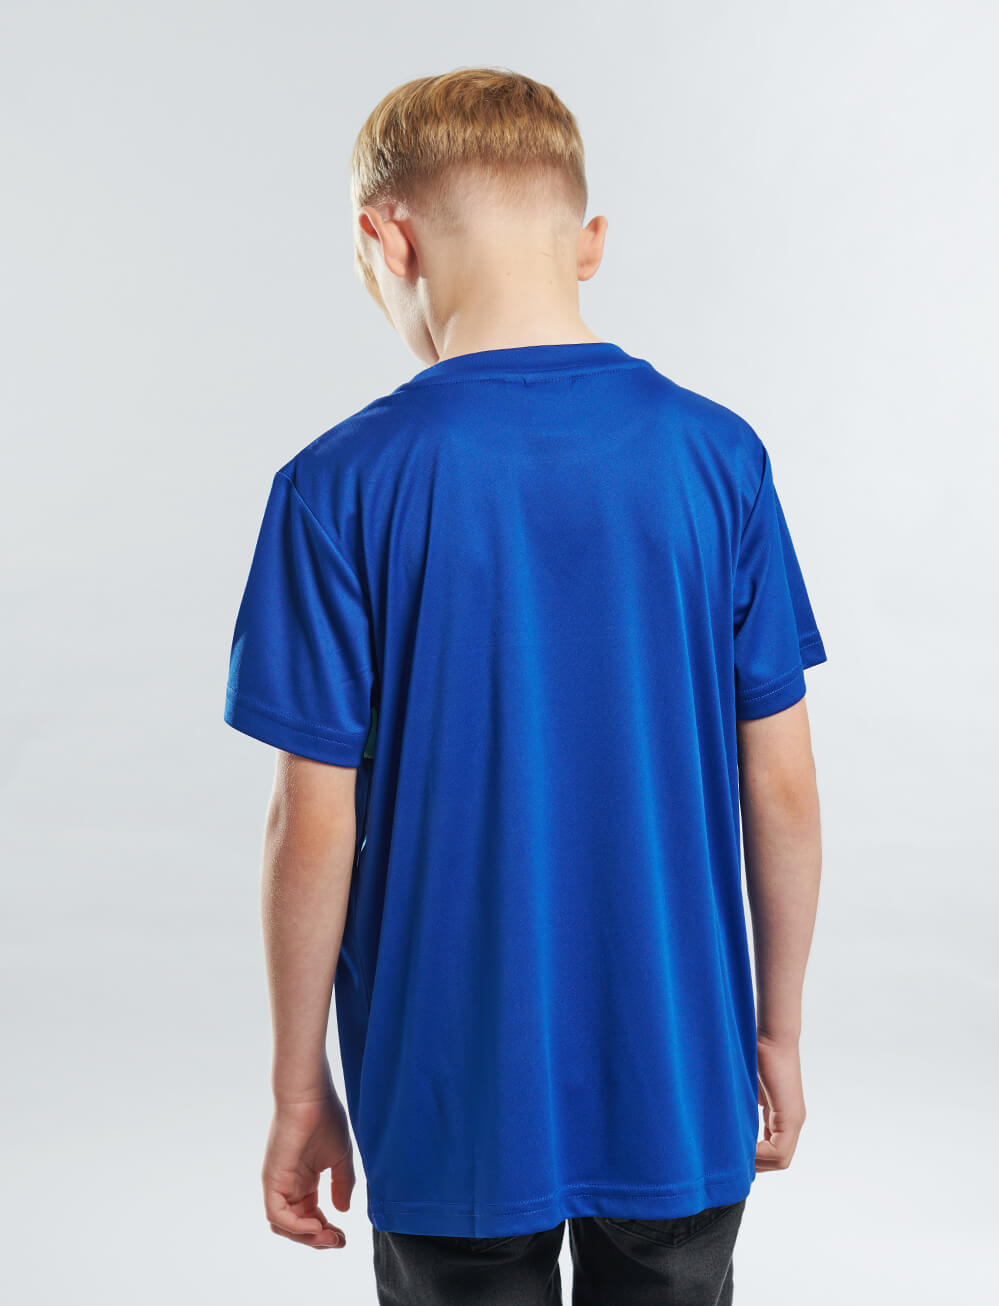 Official Chelsea Kids Wordmark T-Shirt - Royal Blue - The World Football Store